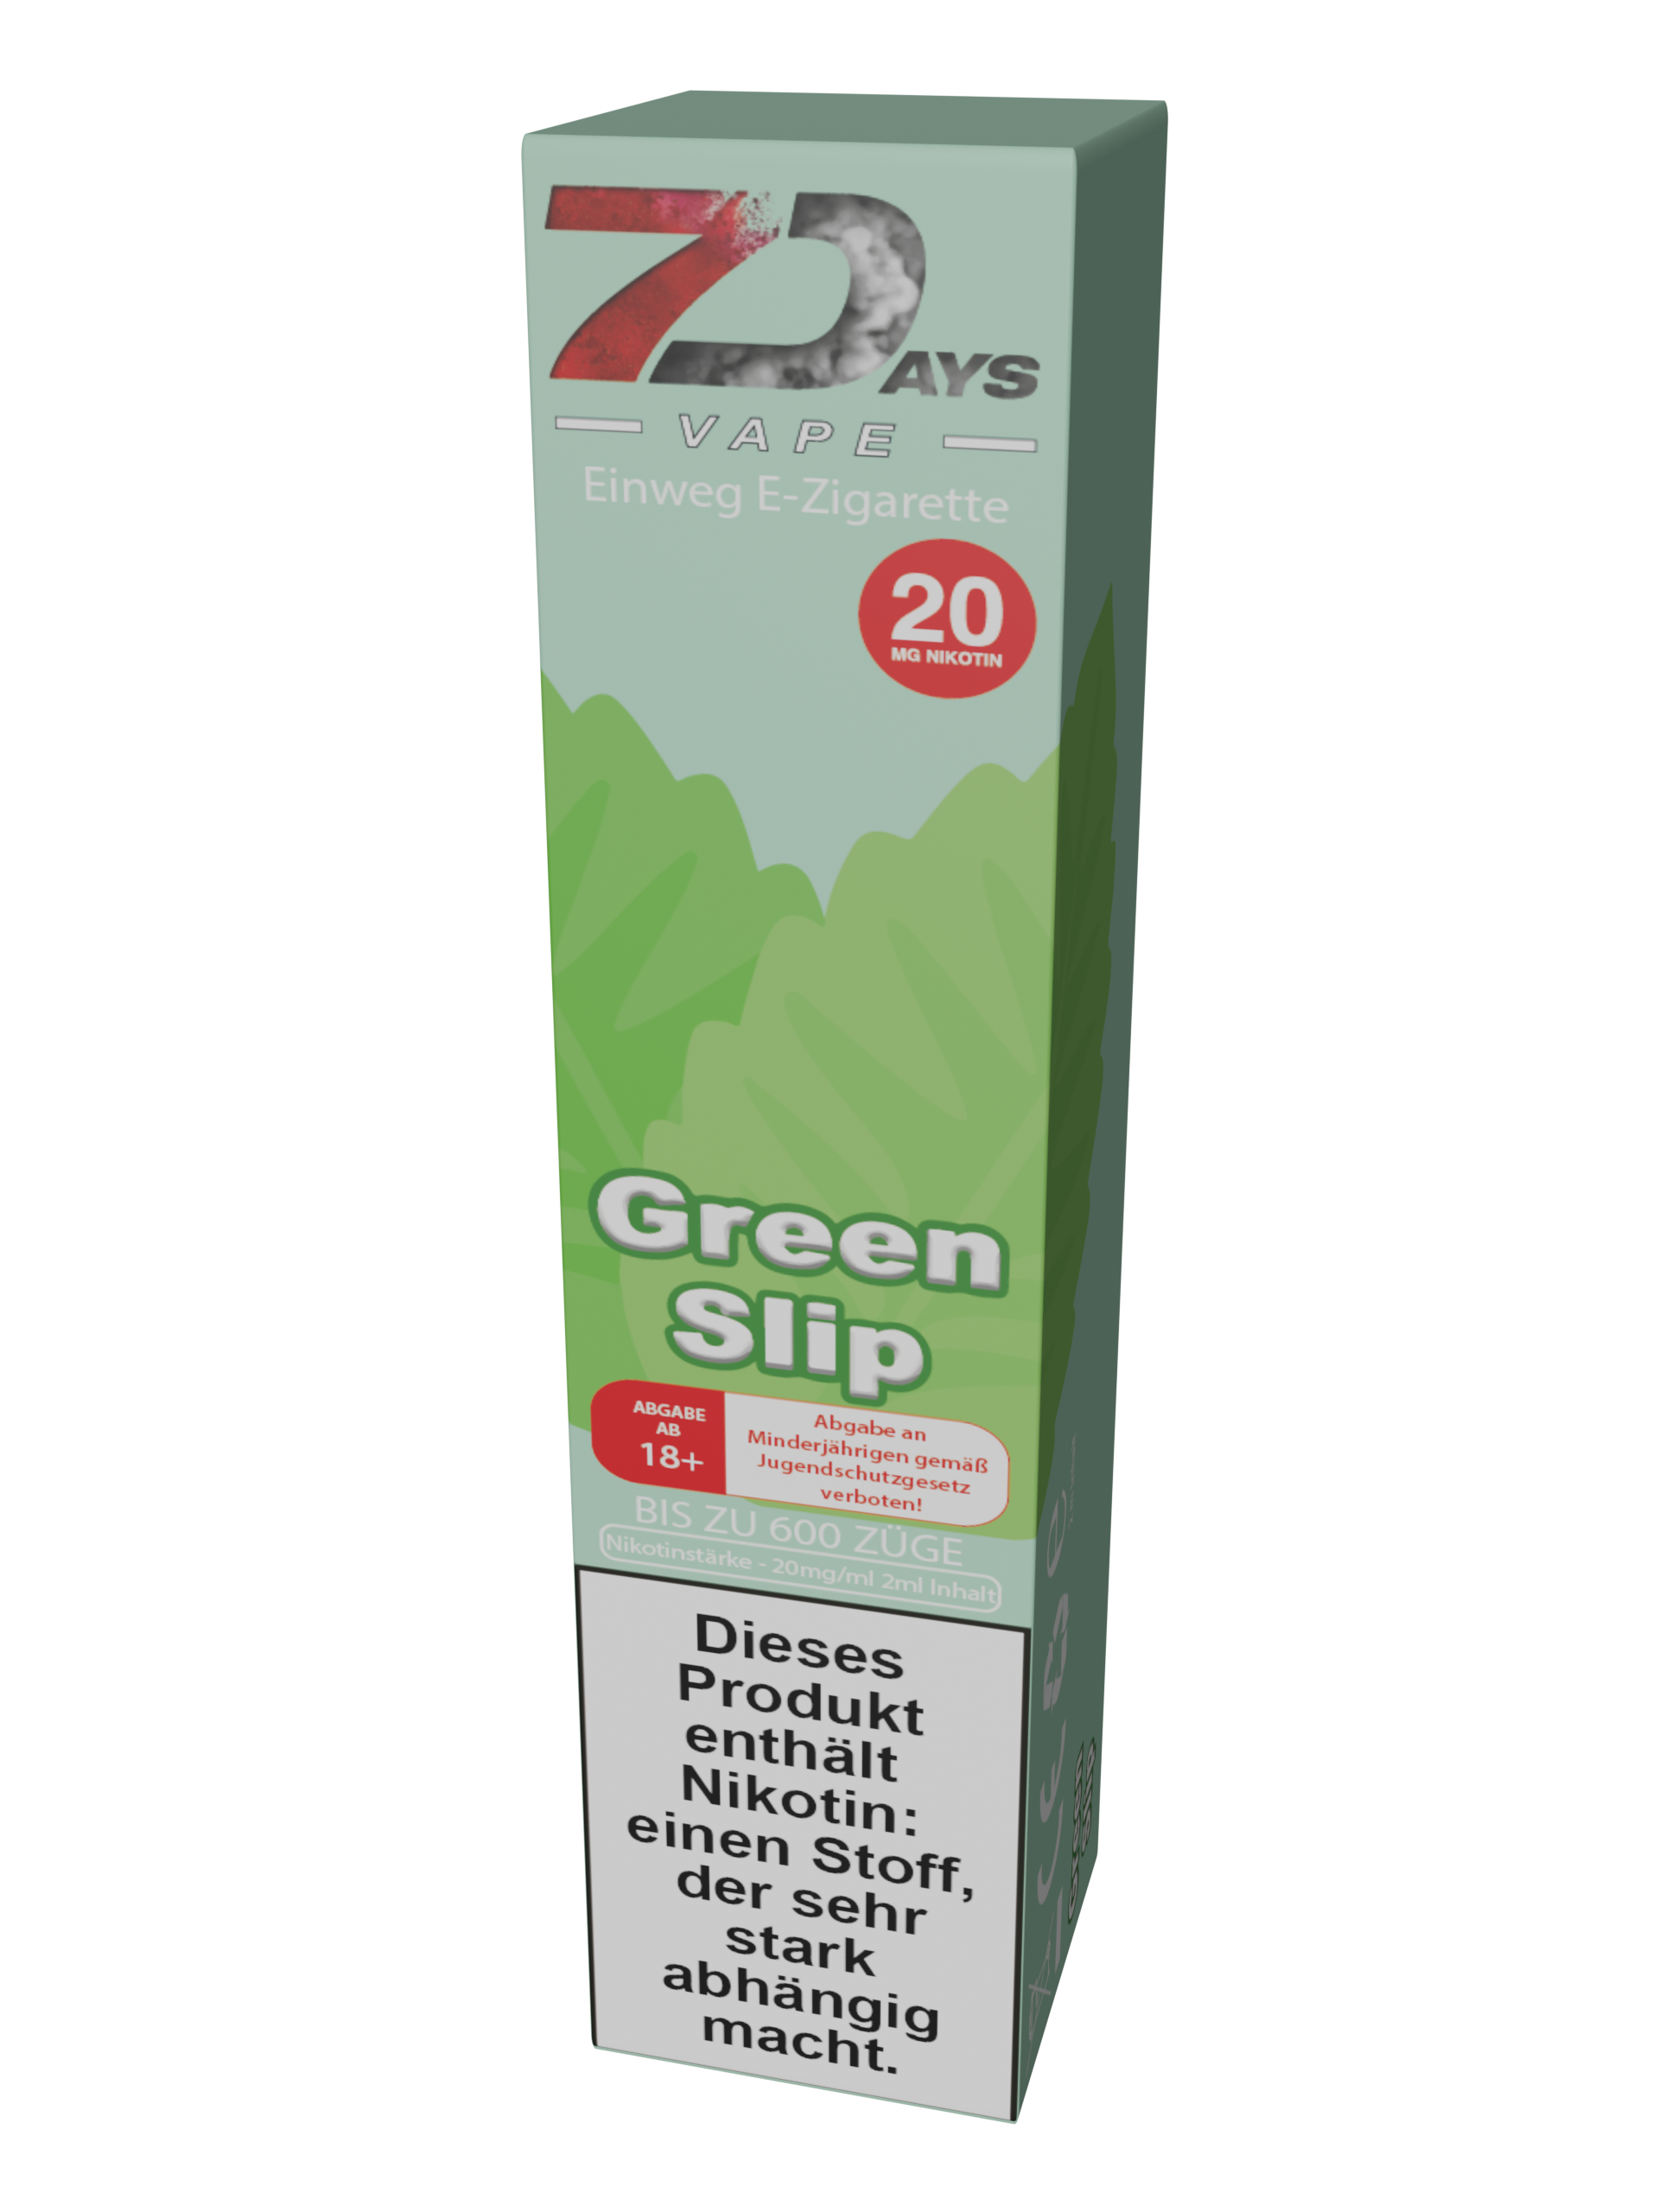 7Days Einweg Vape Green Slip